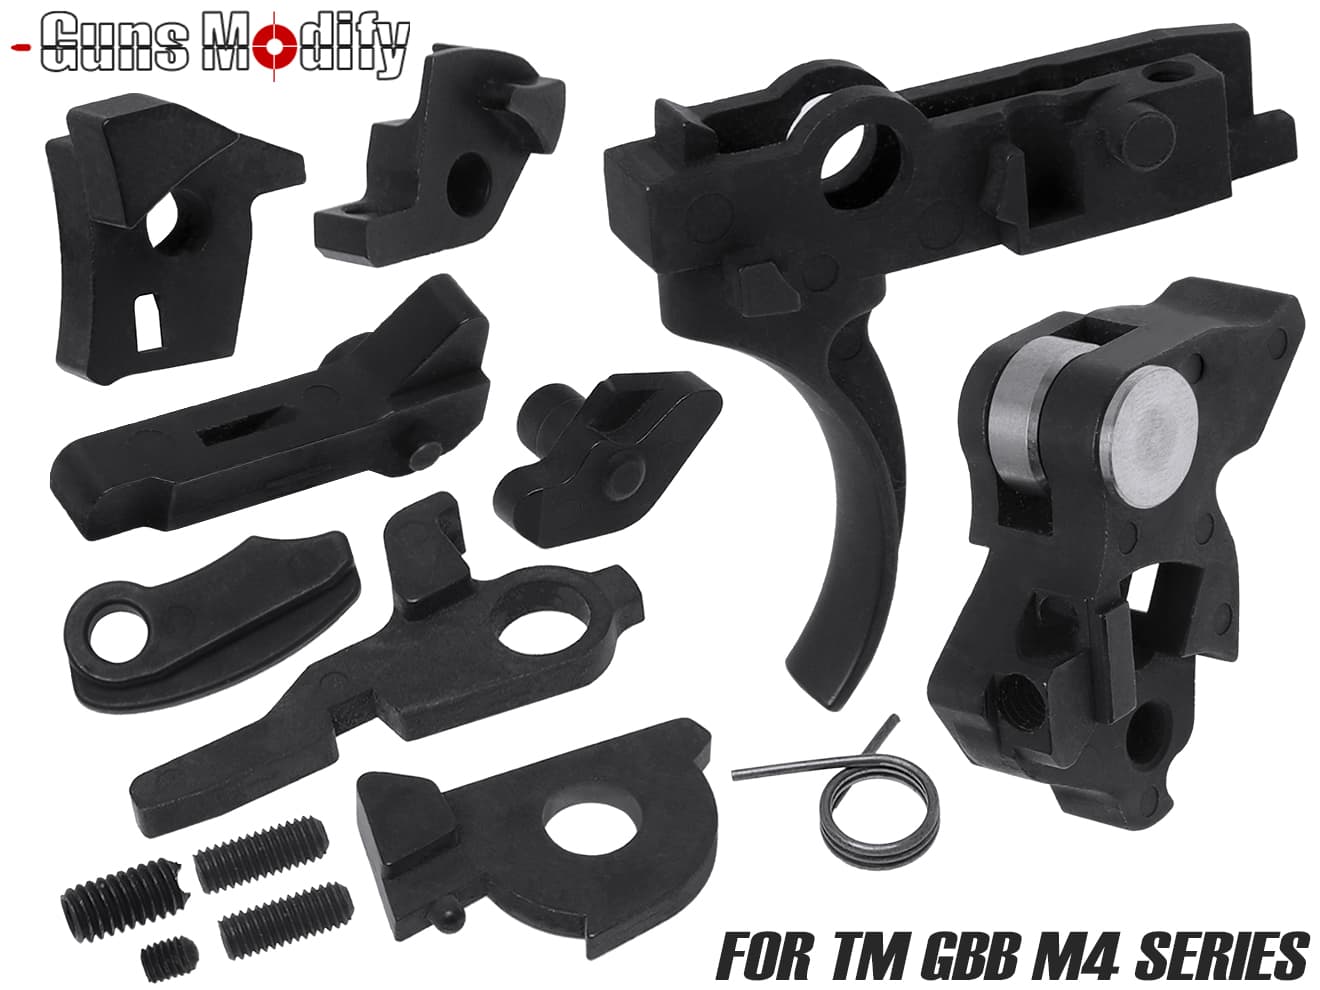 GM0508 Guns Modify アルミCNCトリガーボックス + MIM スチール